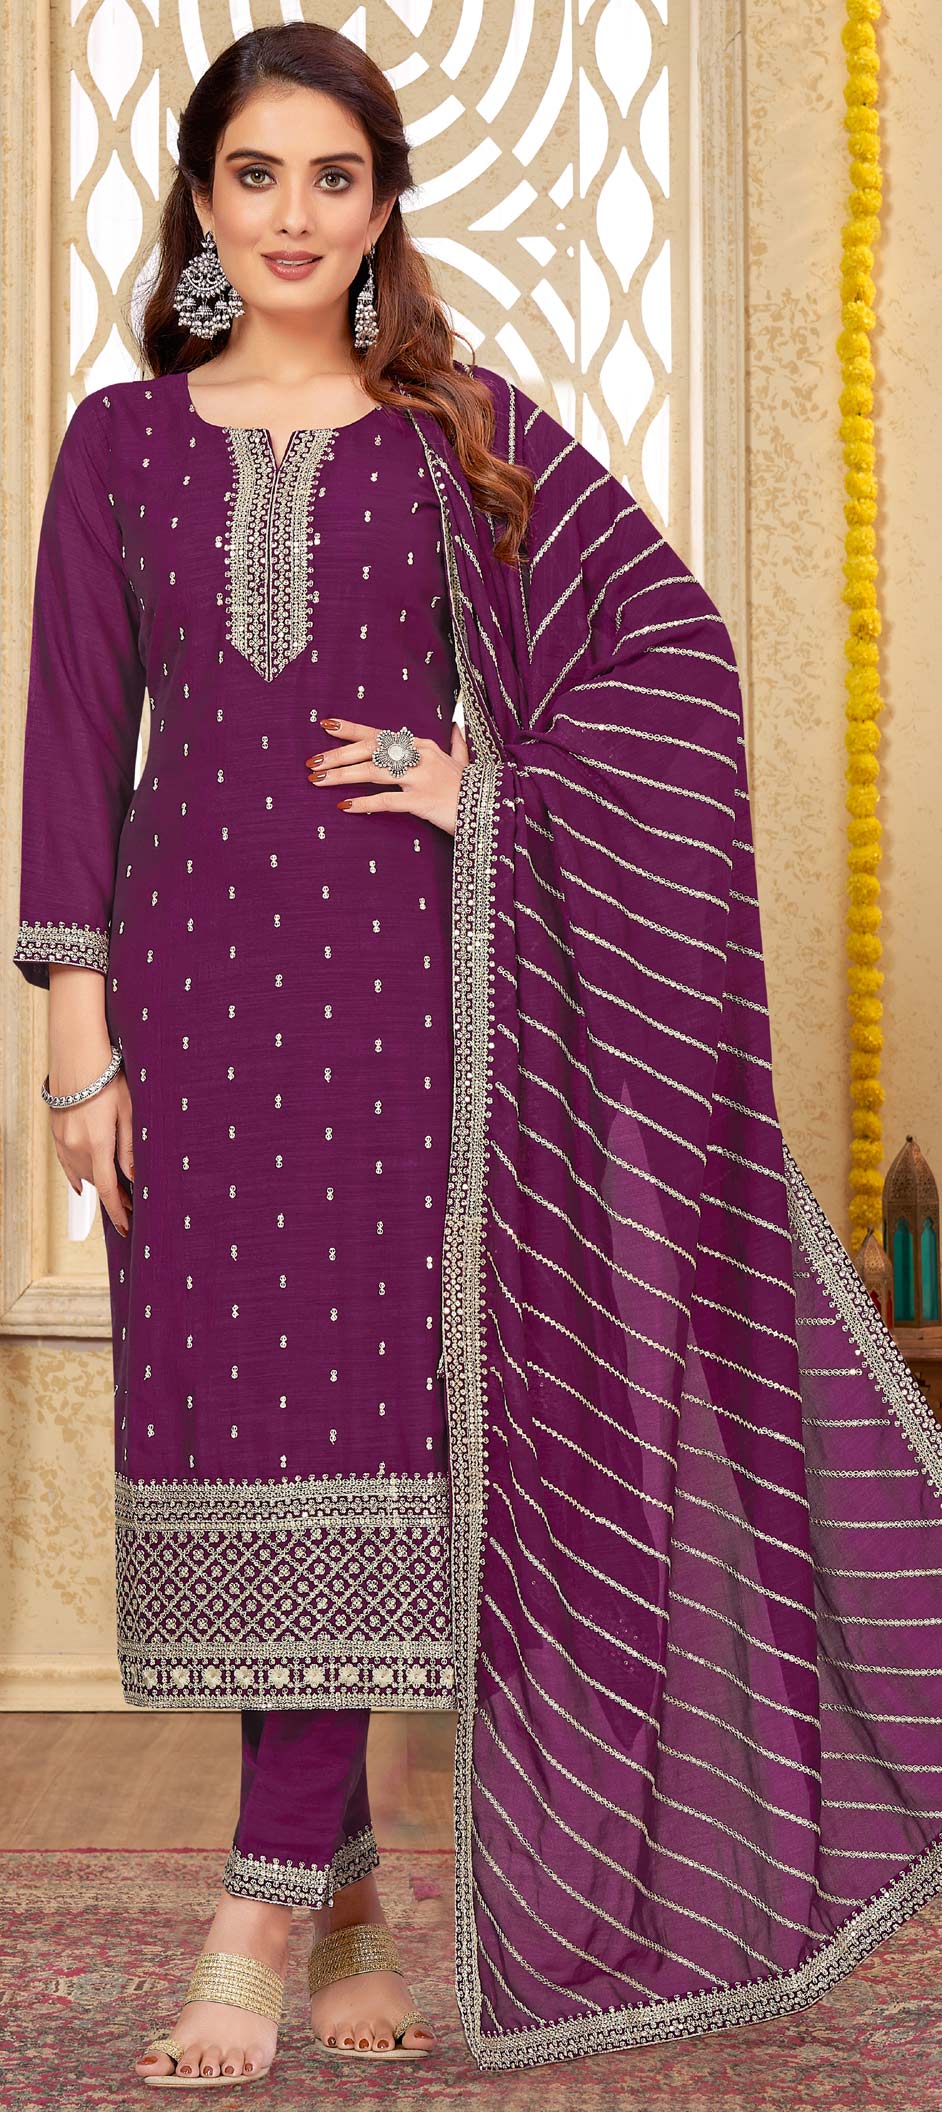 Eba Ashpreet Long Heavy Faux Georgette With Embroidery Work Designer Suit  Purple Color DN 1470